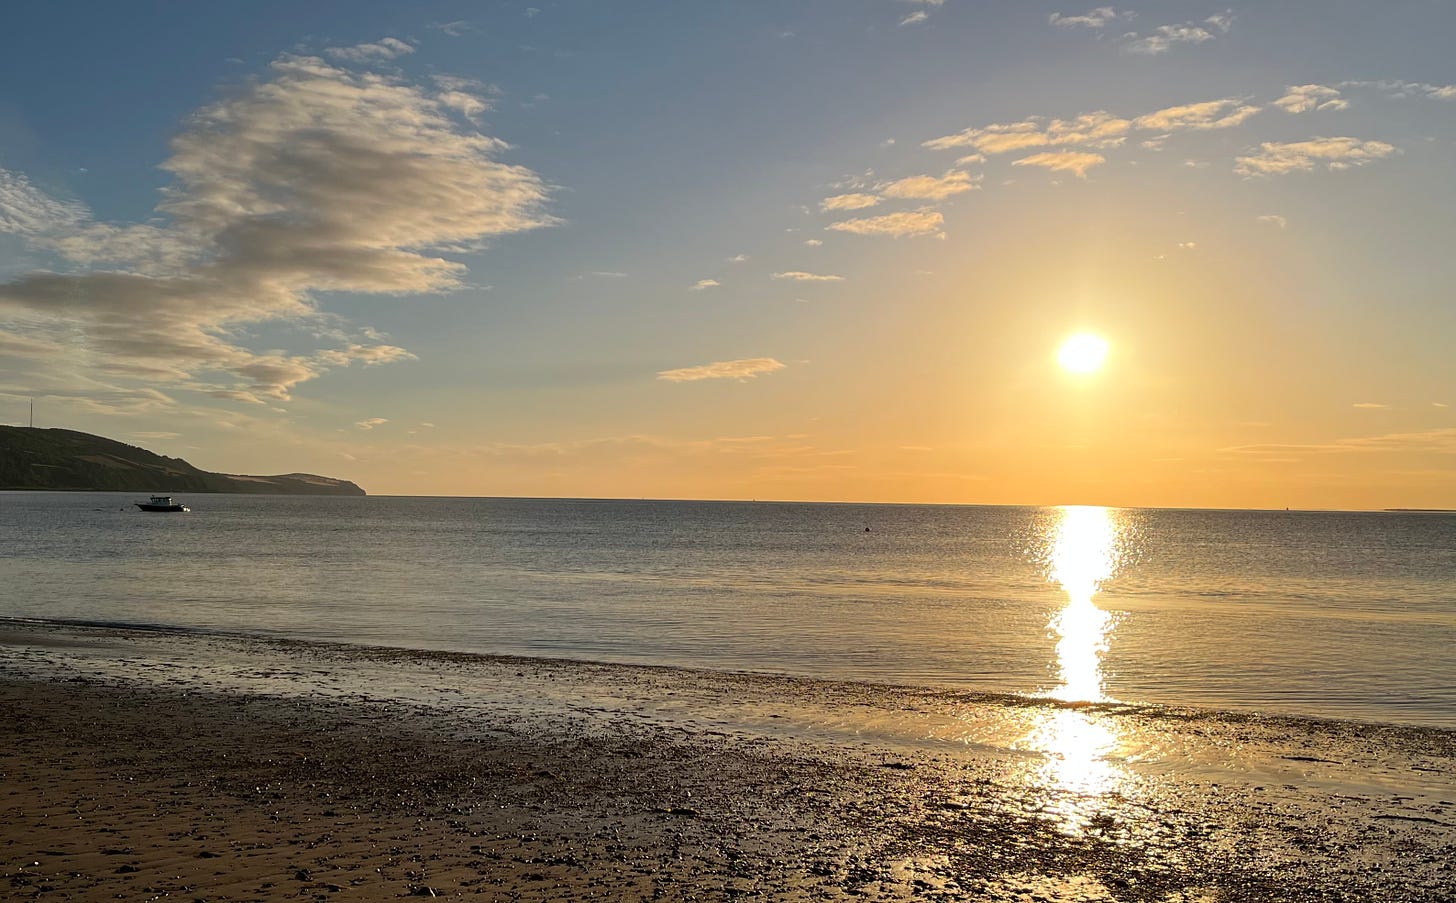 Sunrise rosemarkie beach, black isel scotland triscribe